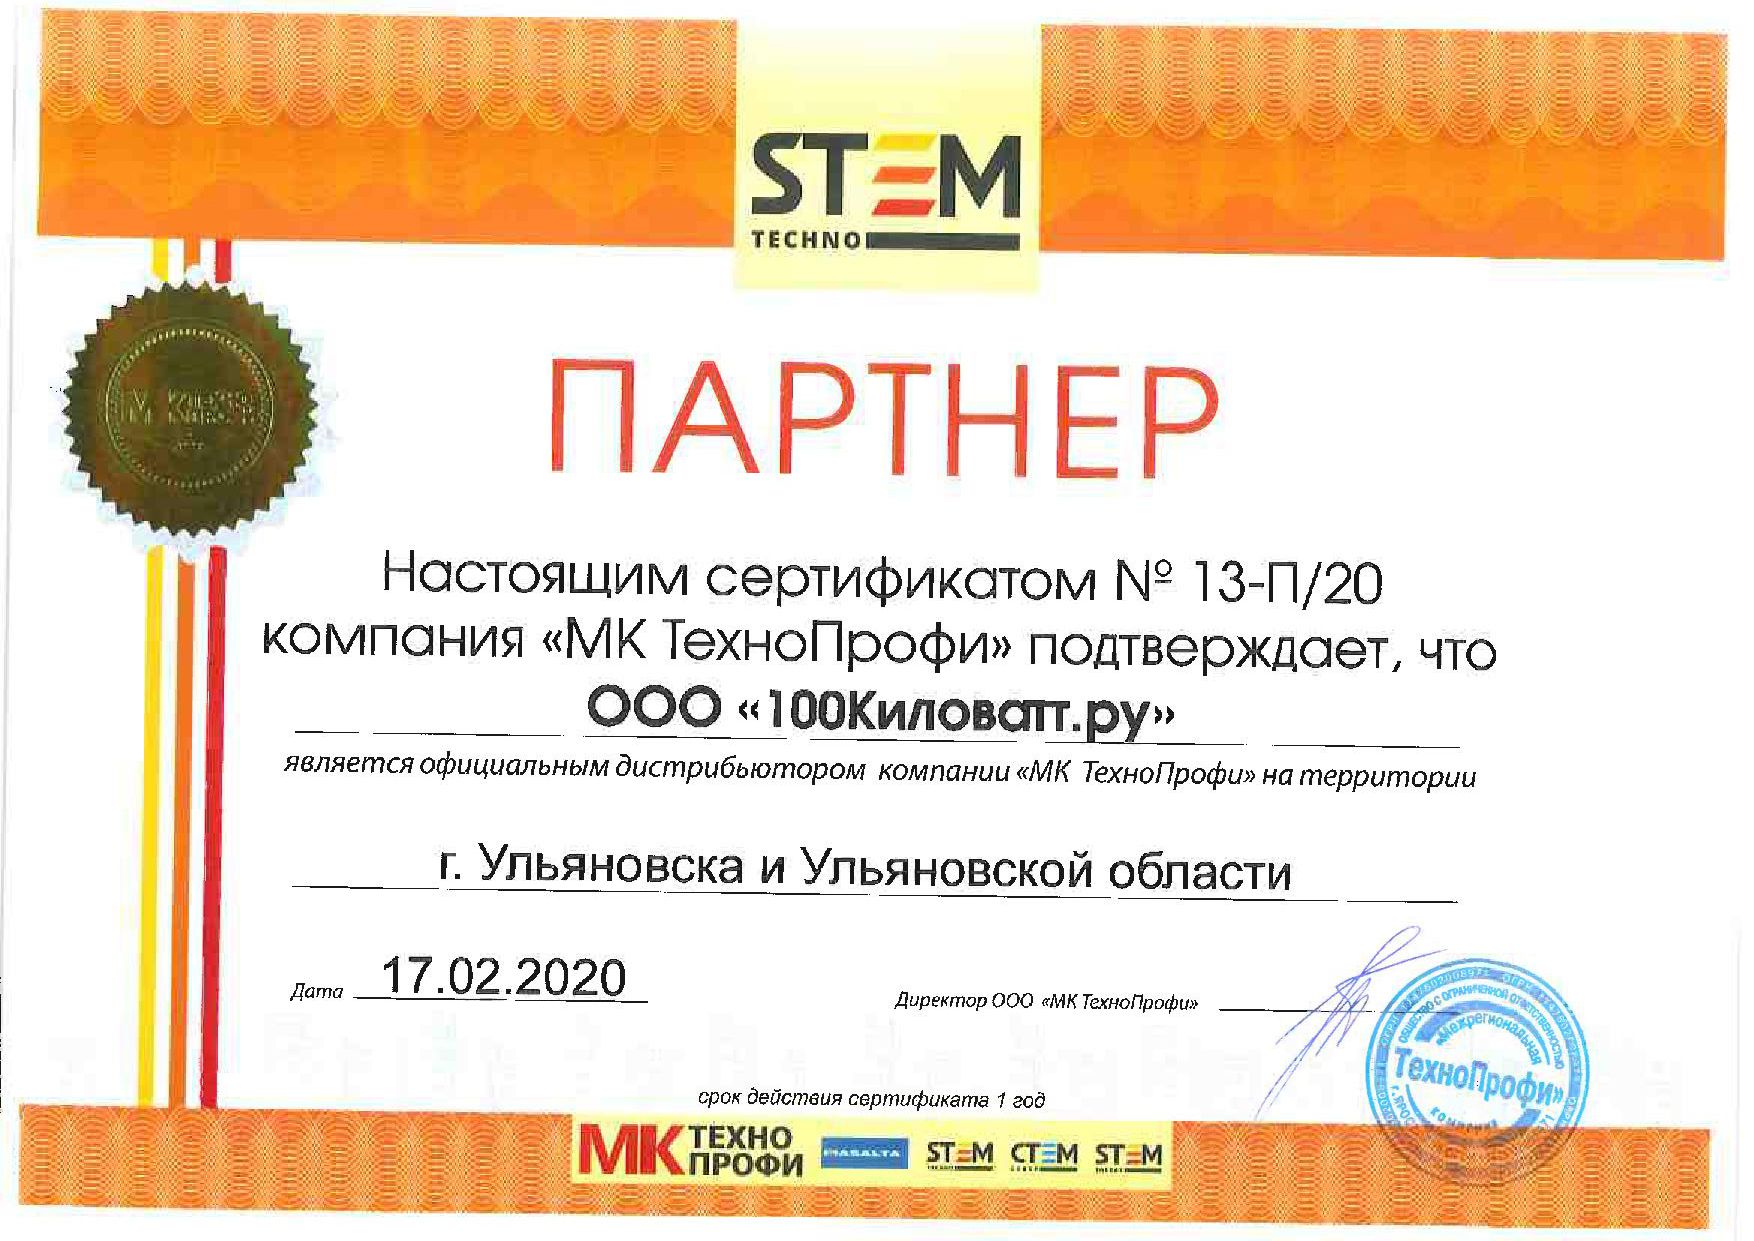 STEM - Сертификат дилера